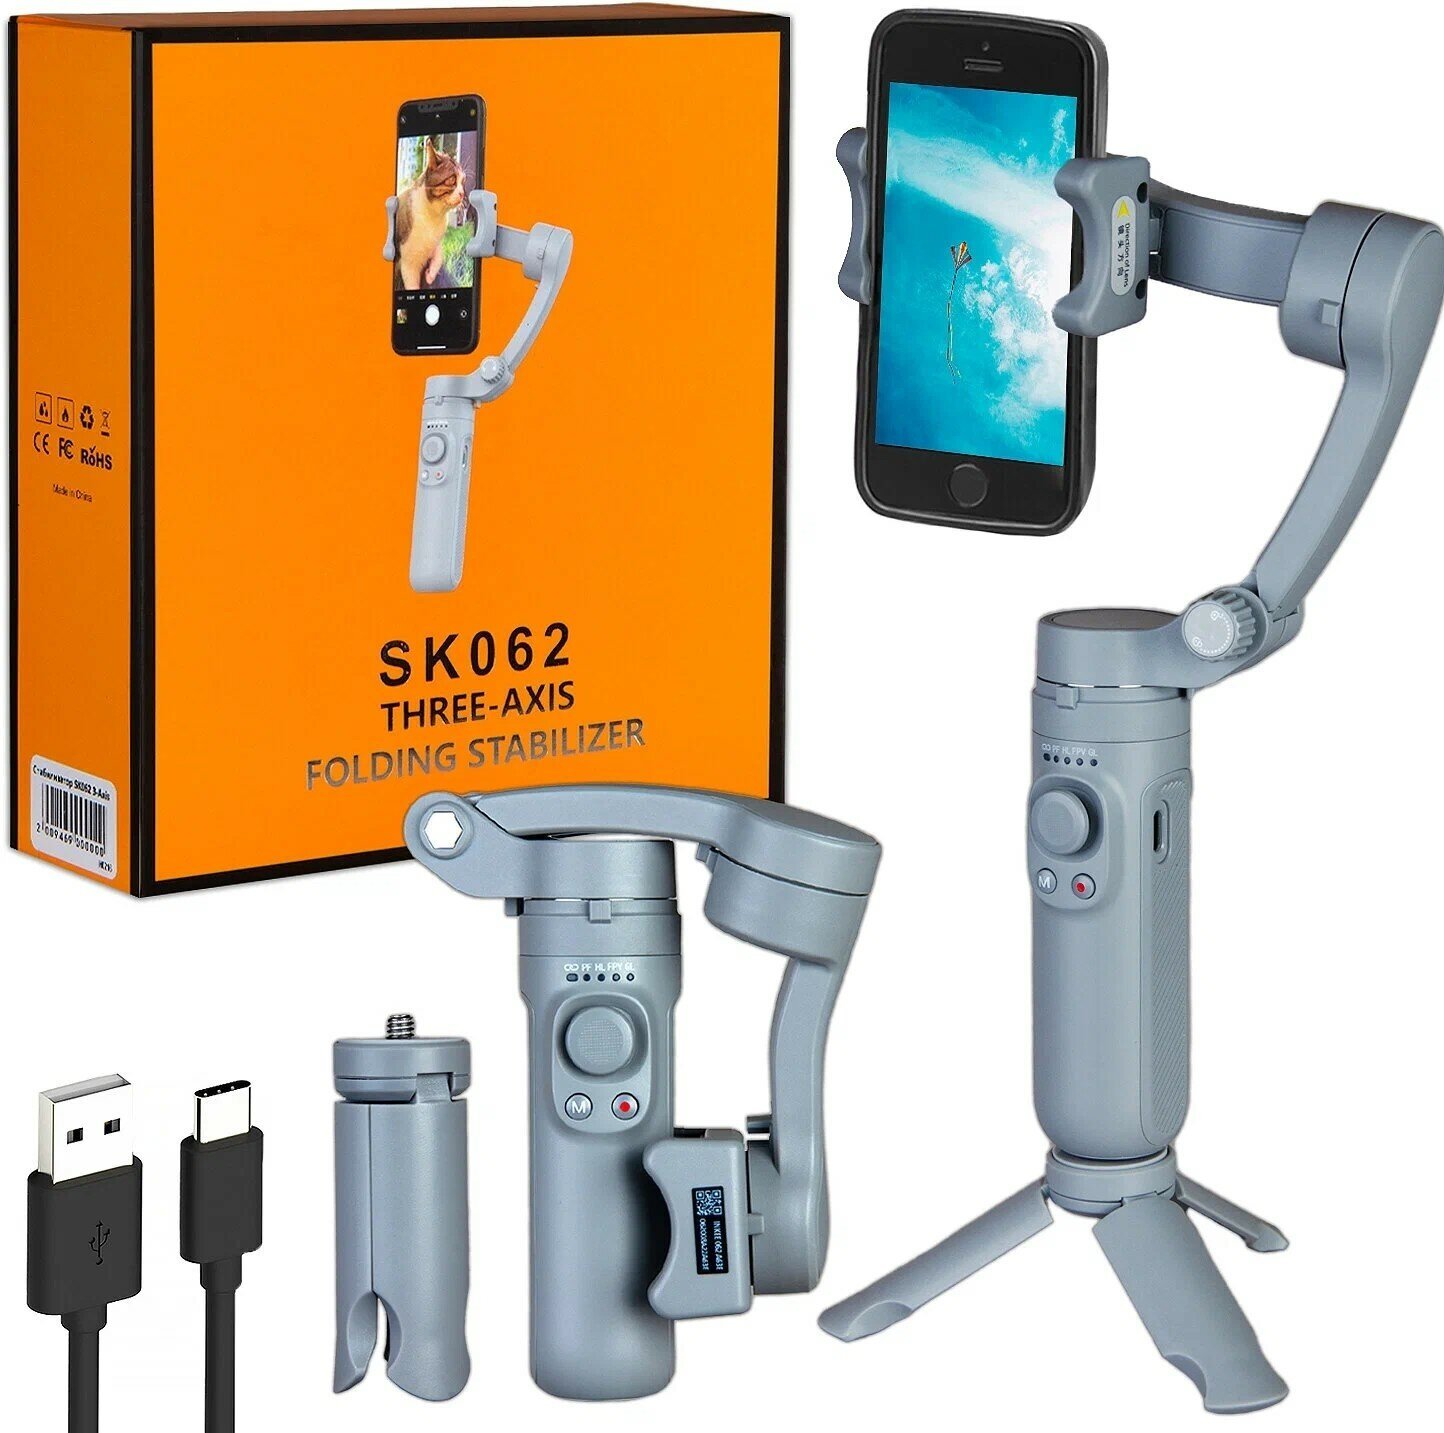 Стабилизатор SK 062 THREE-AXIS FOLDING , штатив, трипод для смартфона